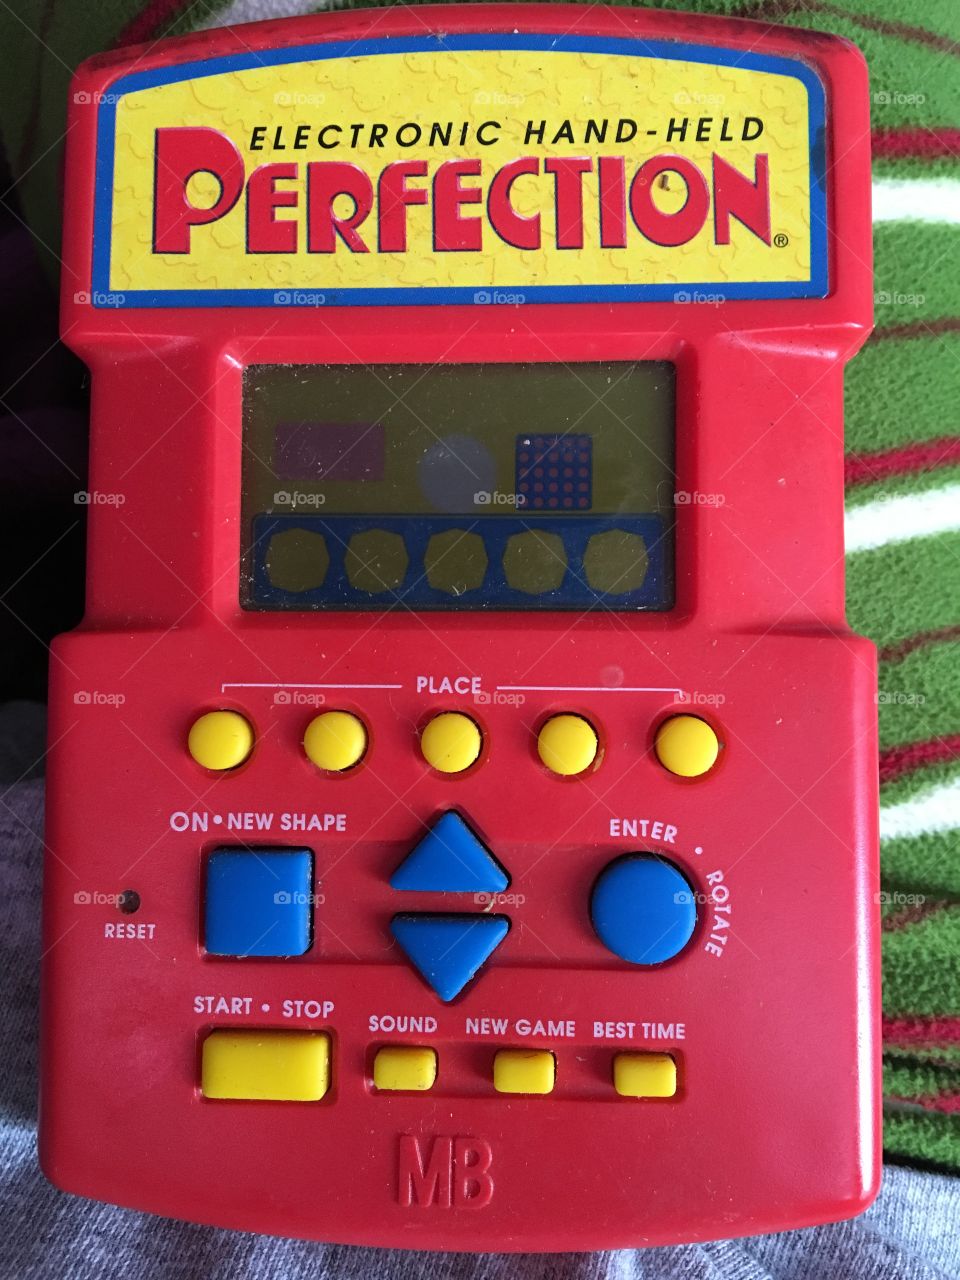 Perfection handheld game